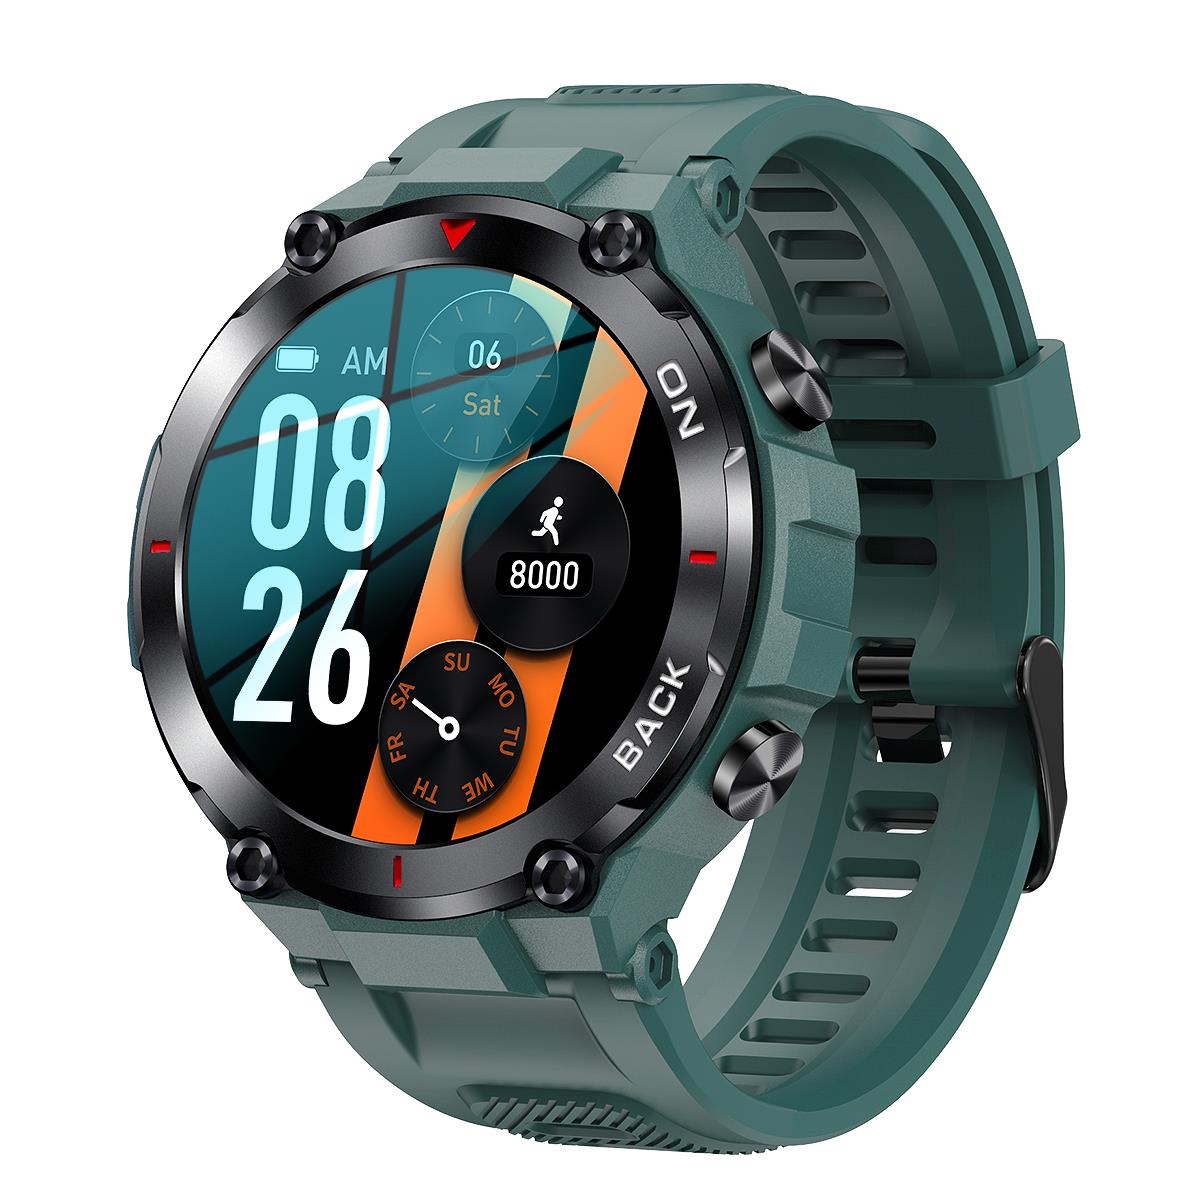 Smartwatch cassa plastica 50 mm - PAUL EDWARD